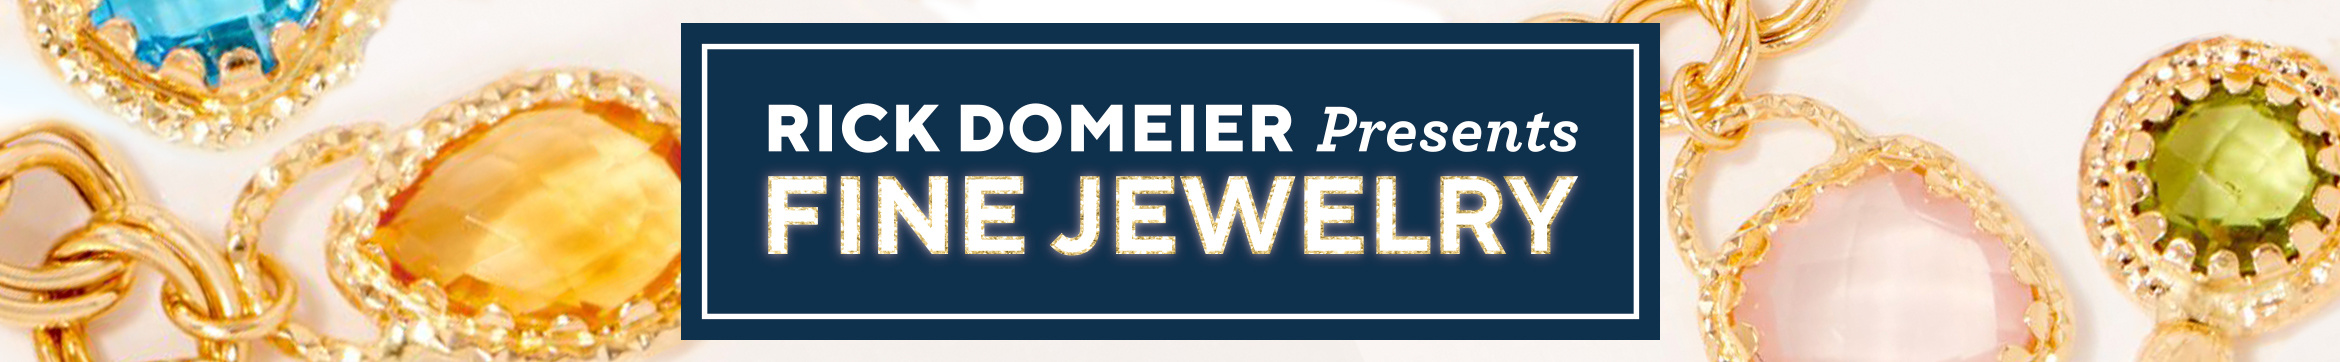 Rick Domeier Presents Fine Jewelry